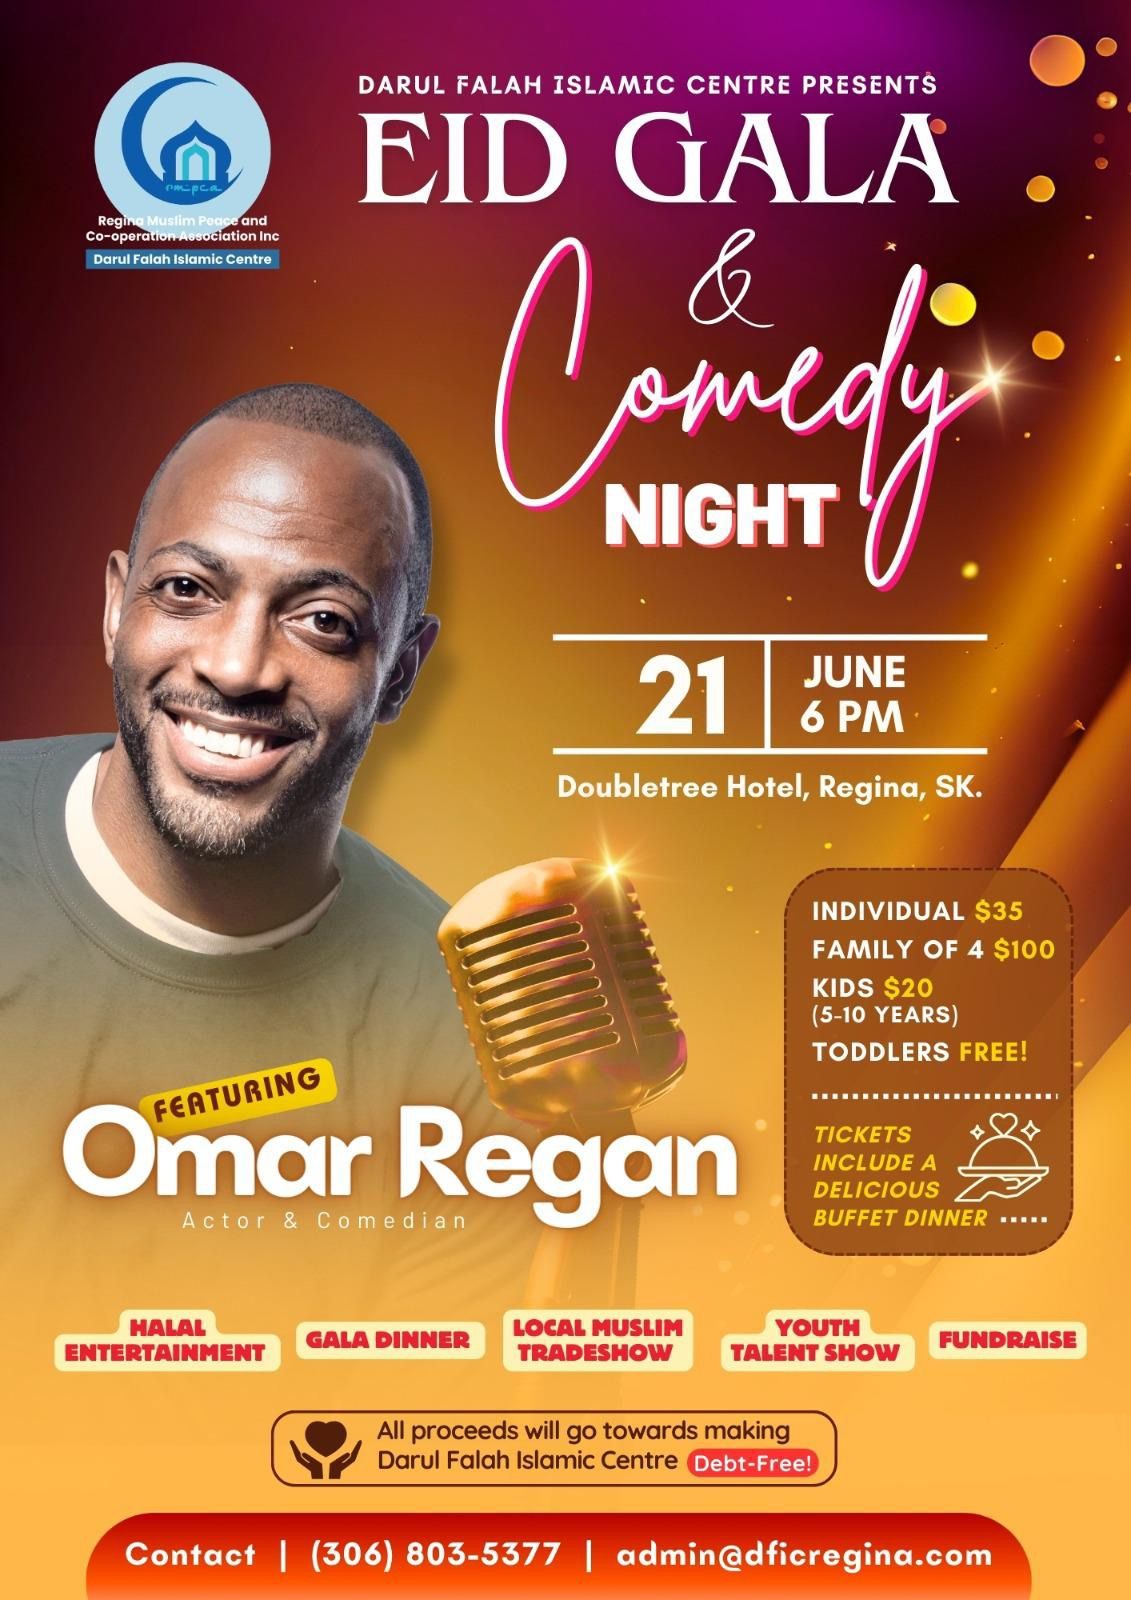 Eid Gala and Comedy Nights with Omar Regan